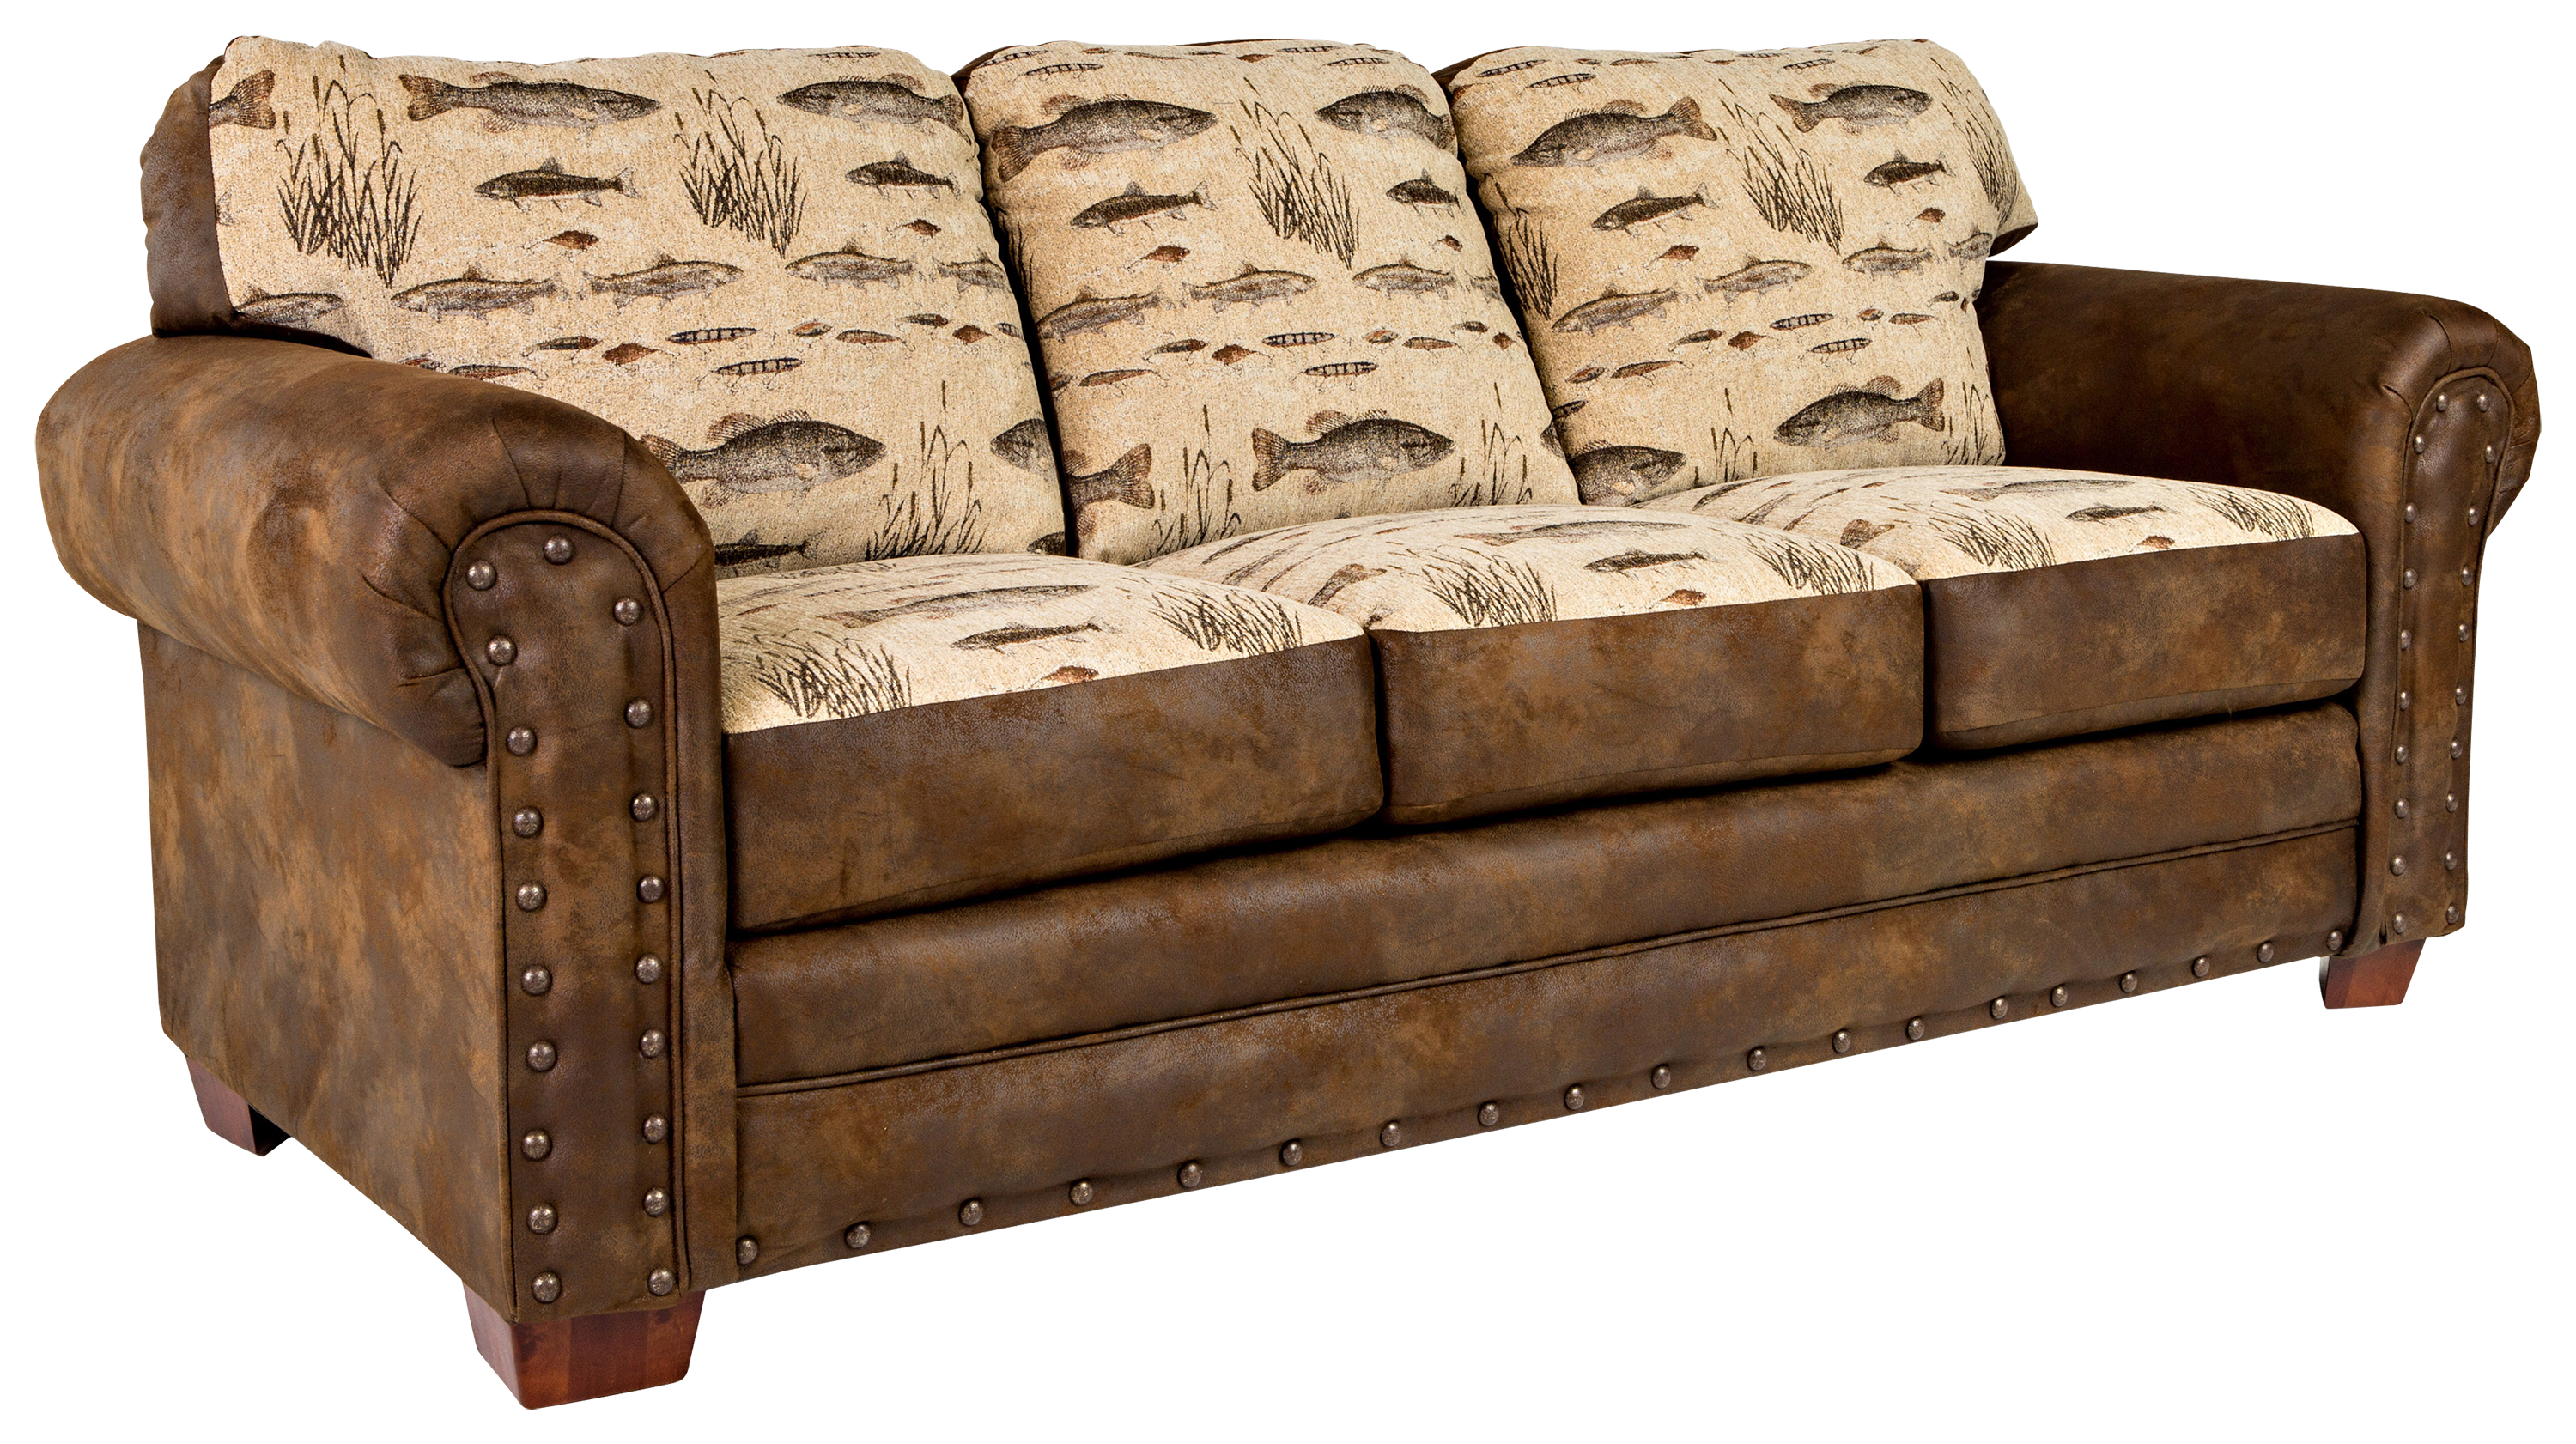 American Furniture Classics Angler's Cove Collection Sleeper Sofa